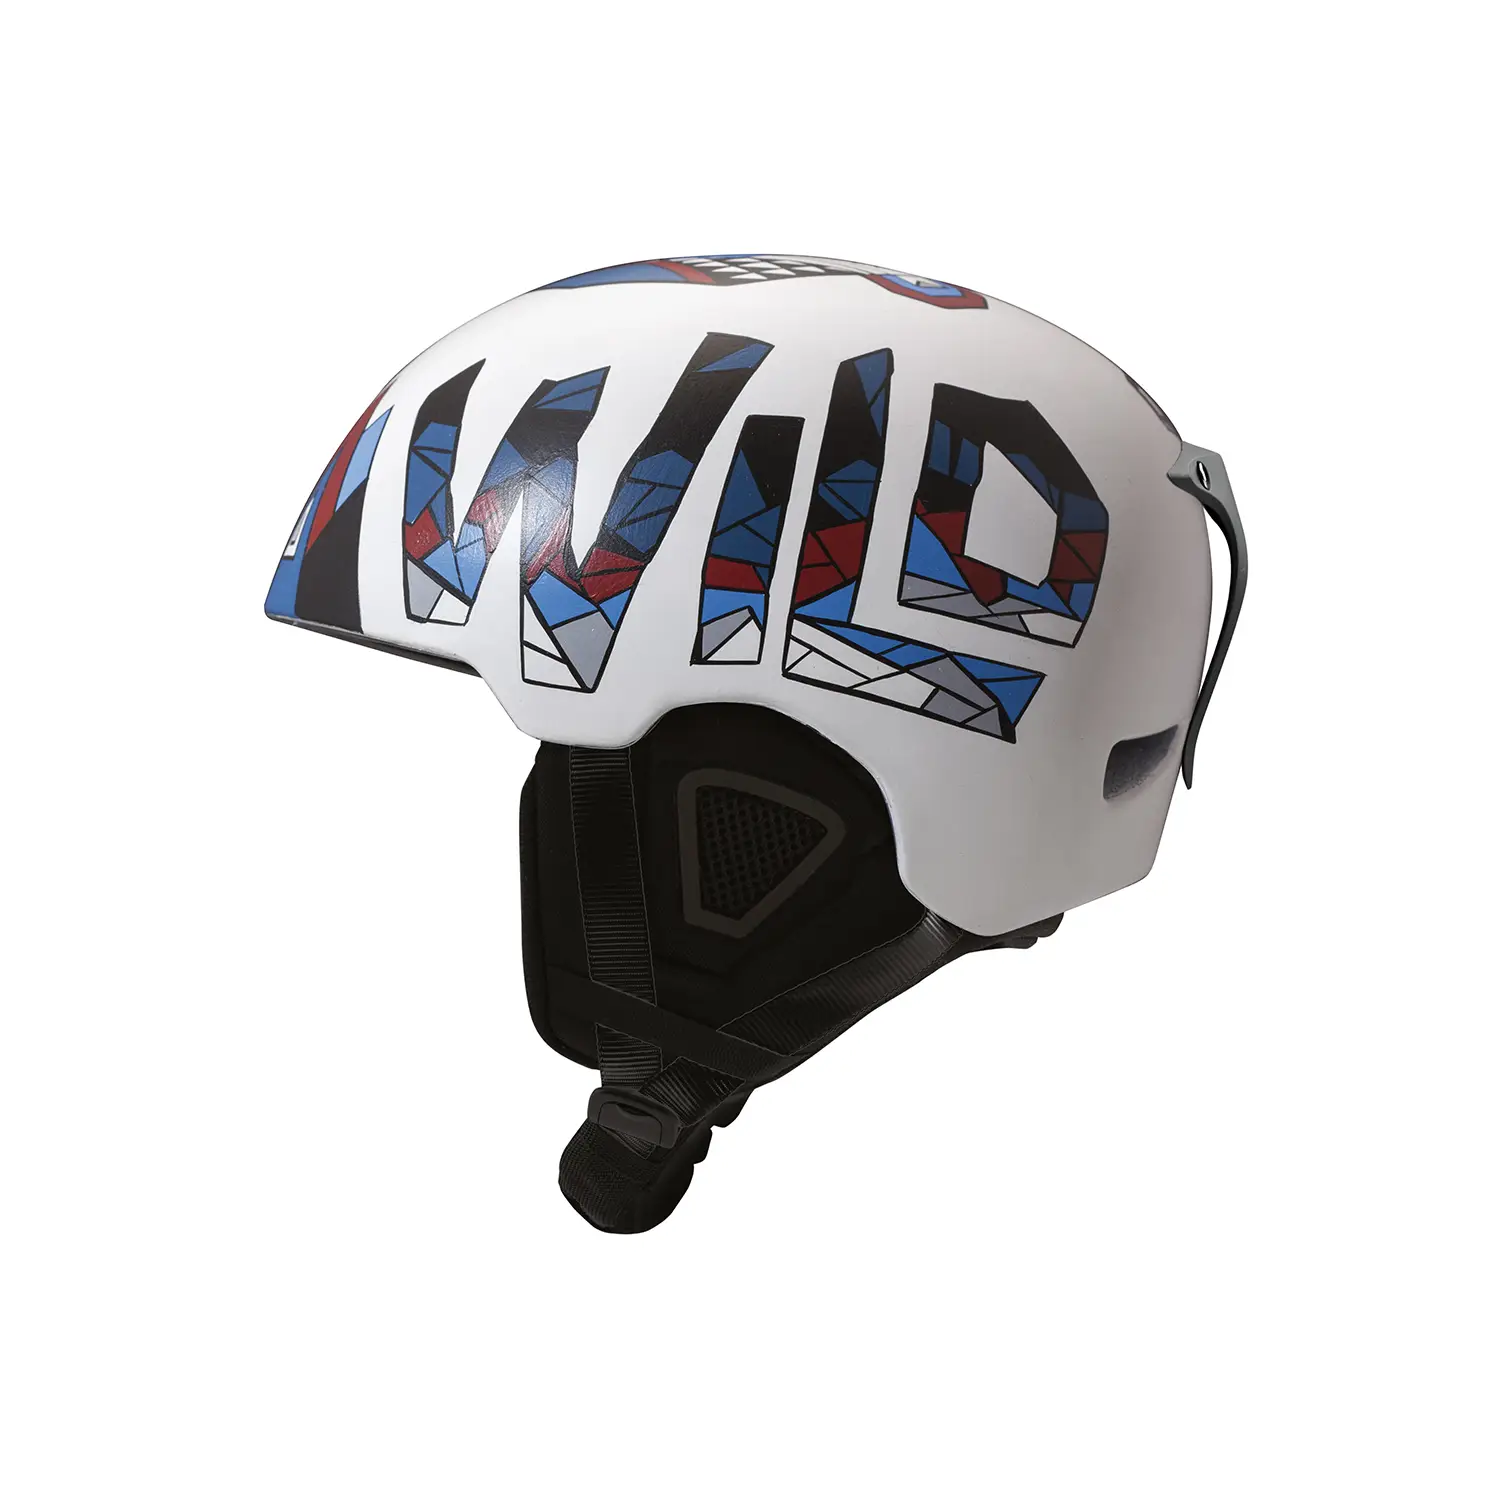 dmd.eu - WILD DMD – Wild – sx